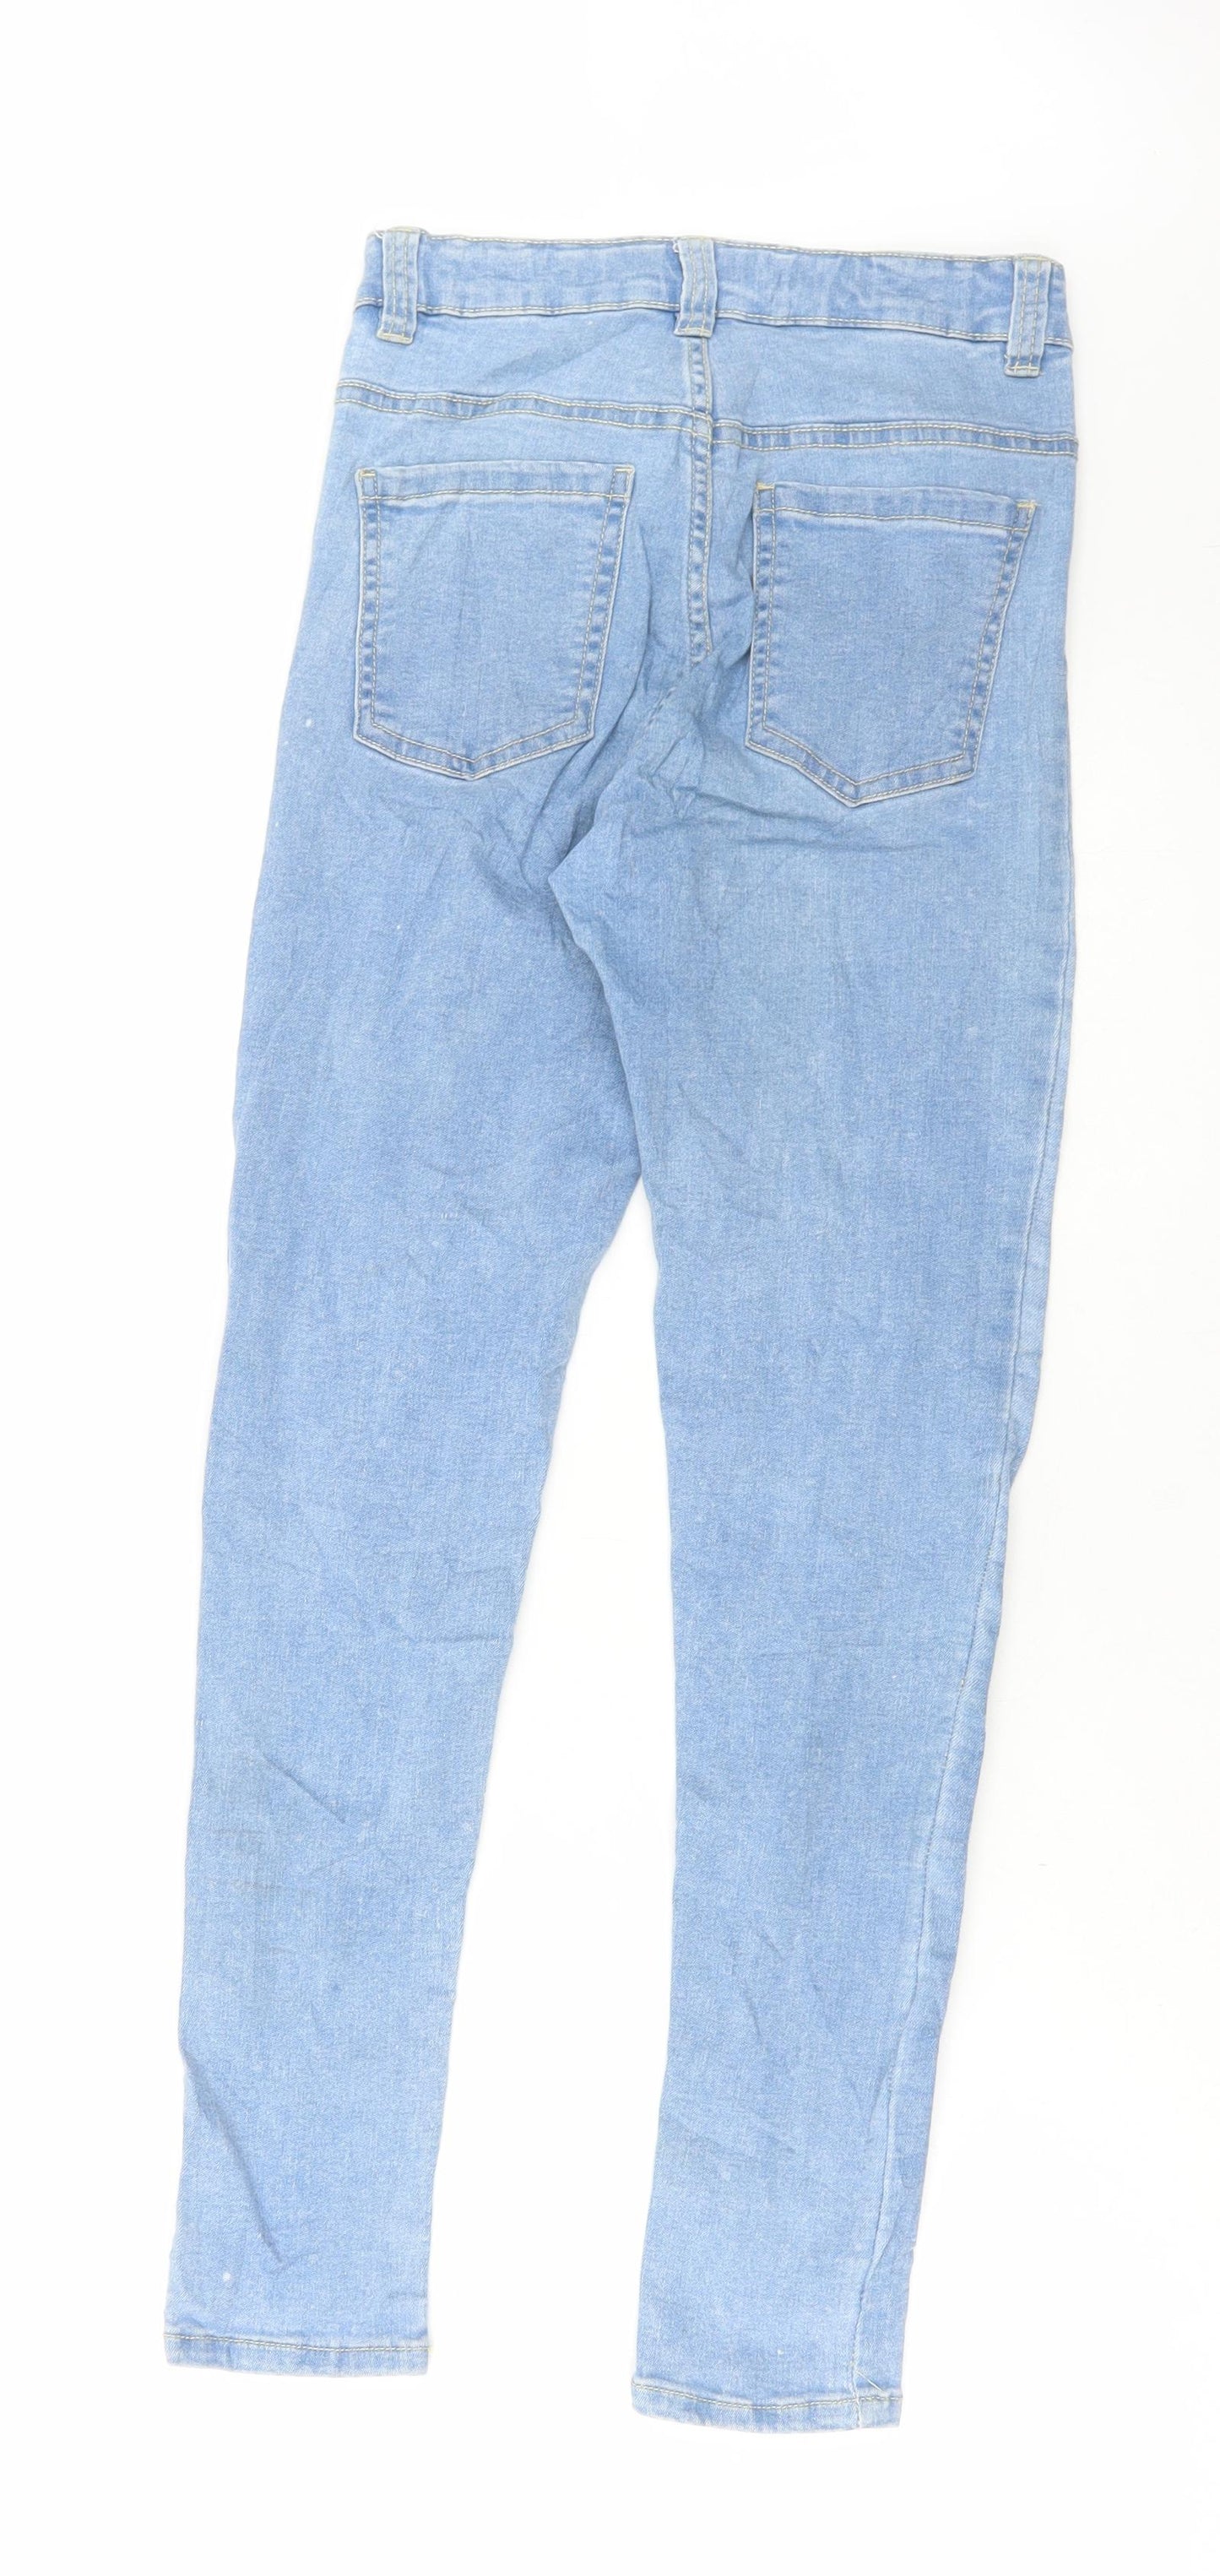 Denim 365 Girls Blue Cotton Skinny Jeans Size 13-14 Years Regular Button - Distressed Denim